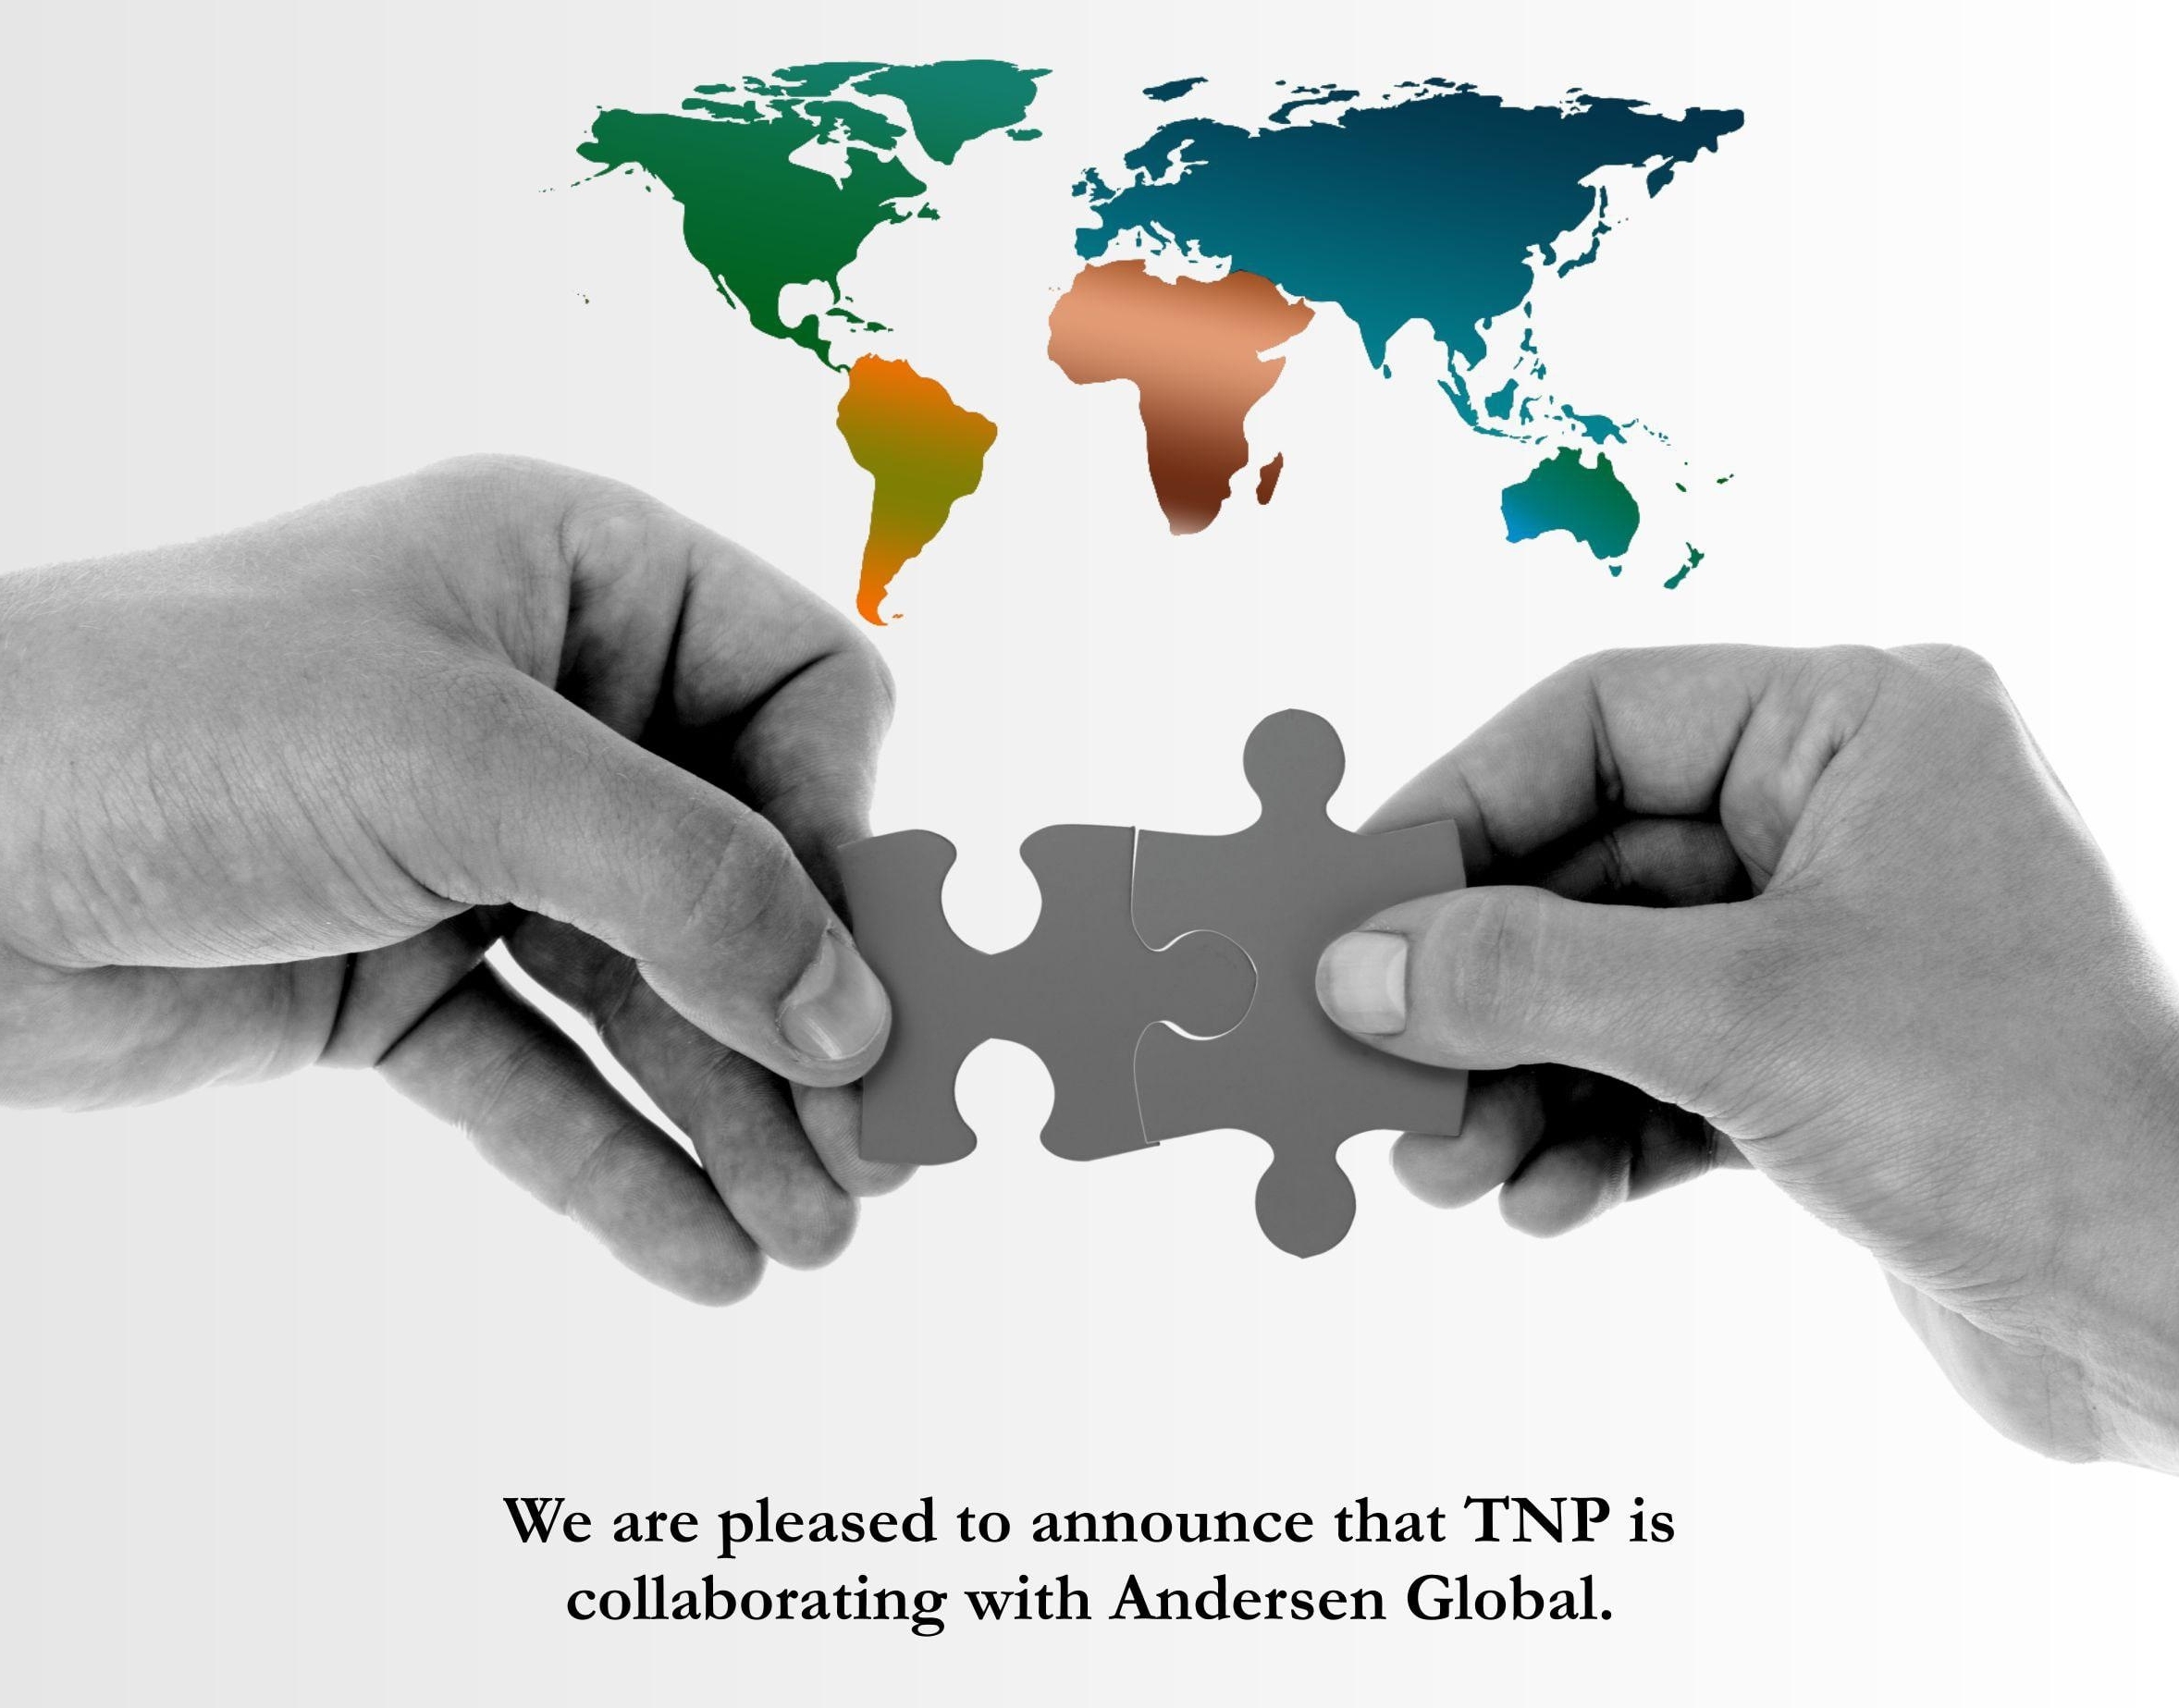 TNP and Andersen Global